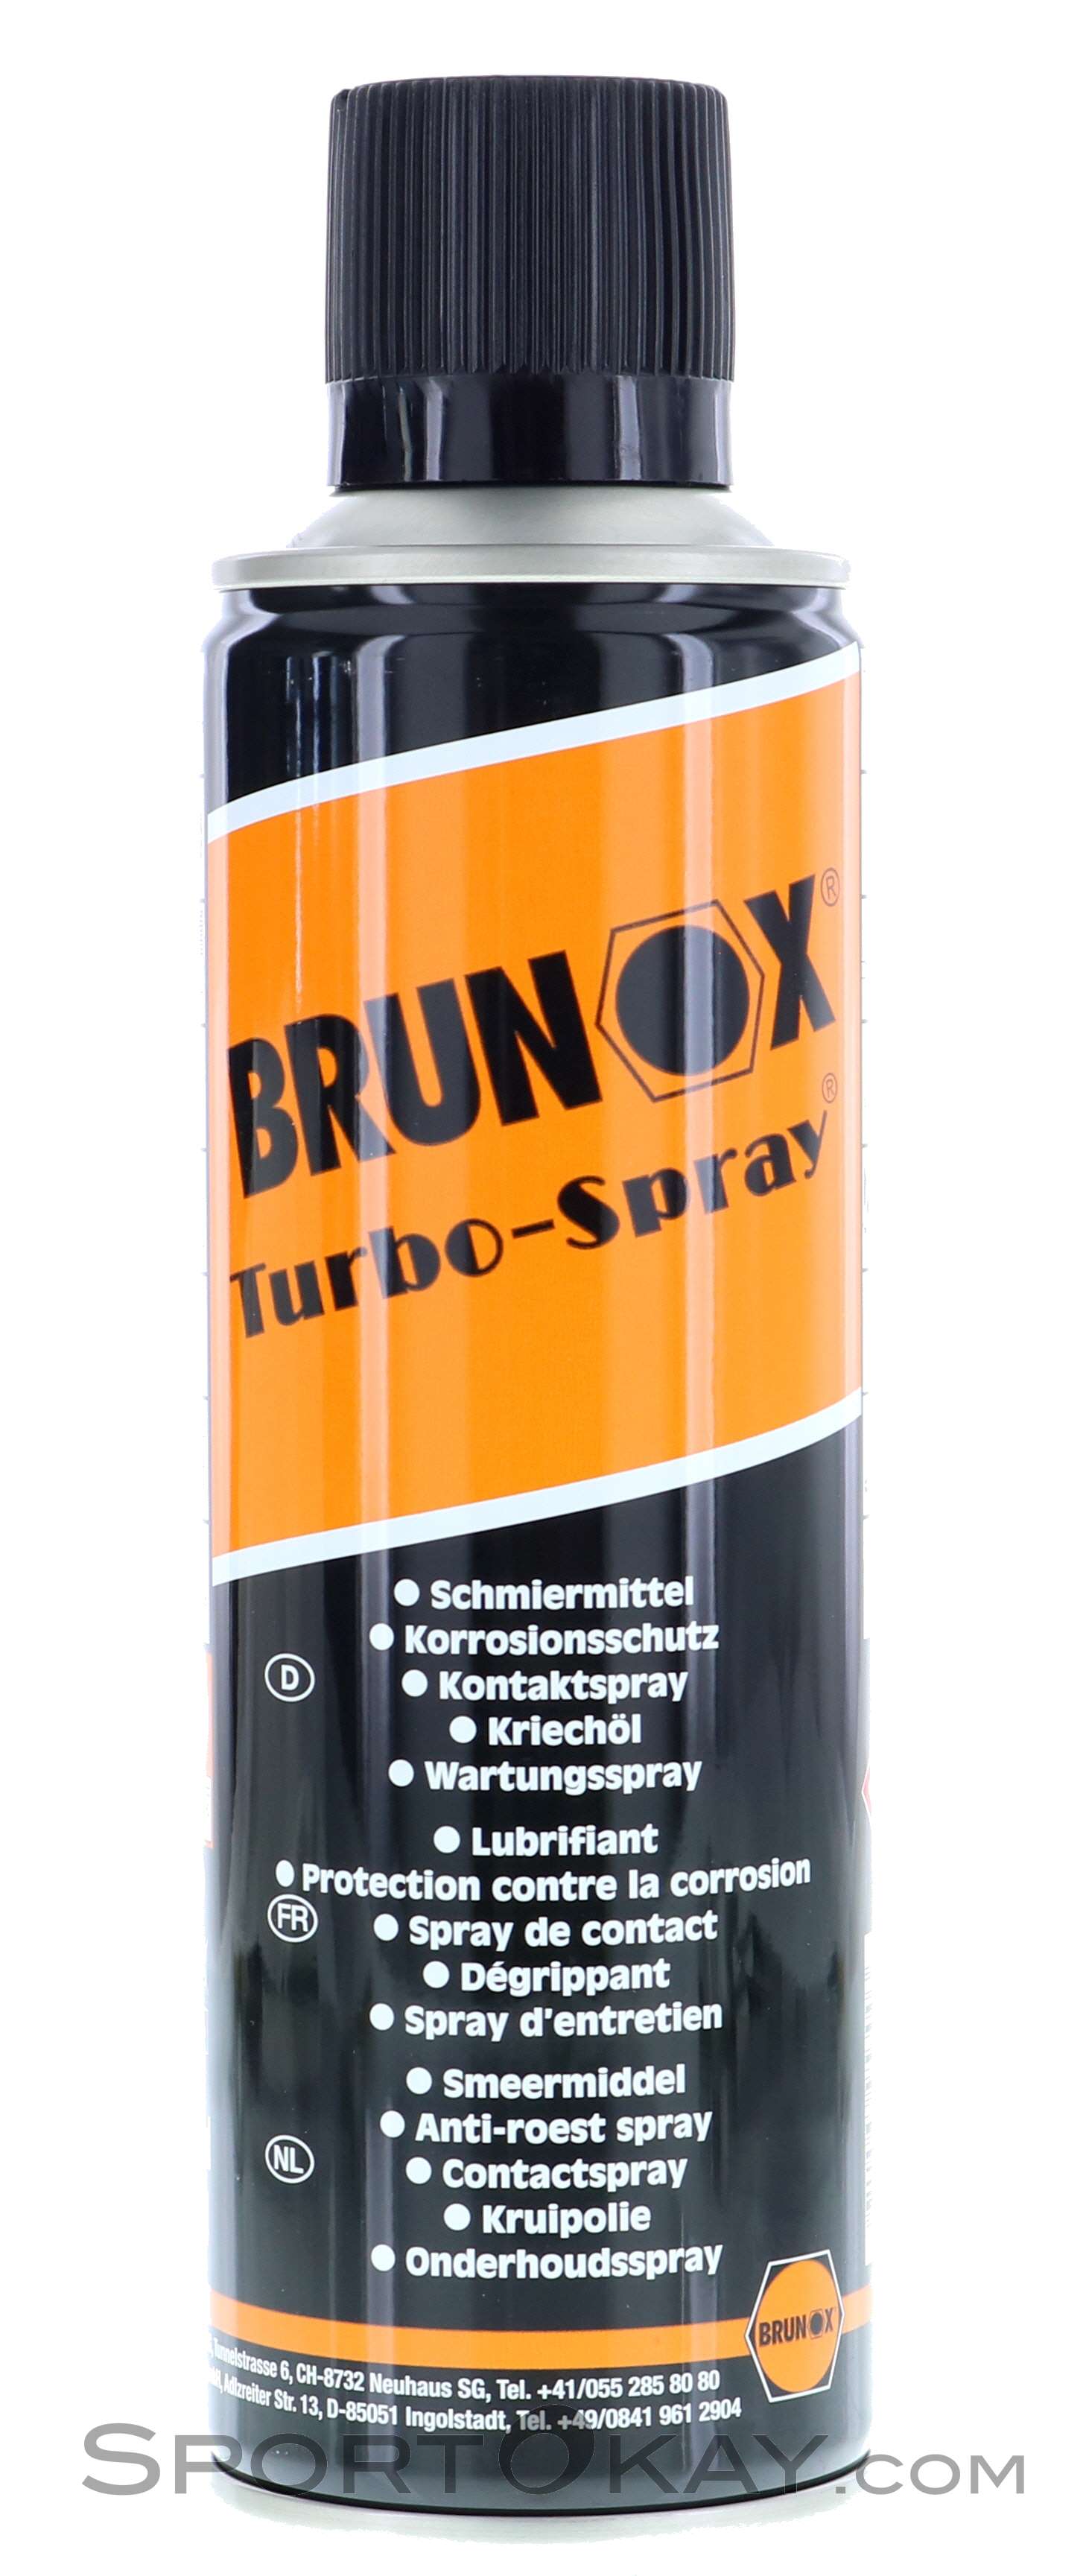 BRUNOX BRUNOX TURBO CLEAN - Nettoyant pour Freins